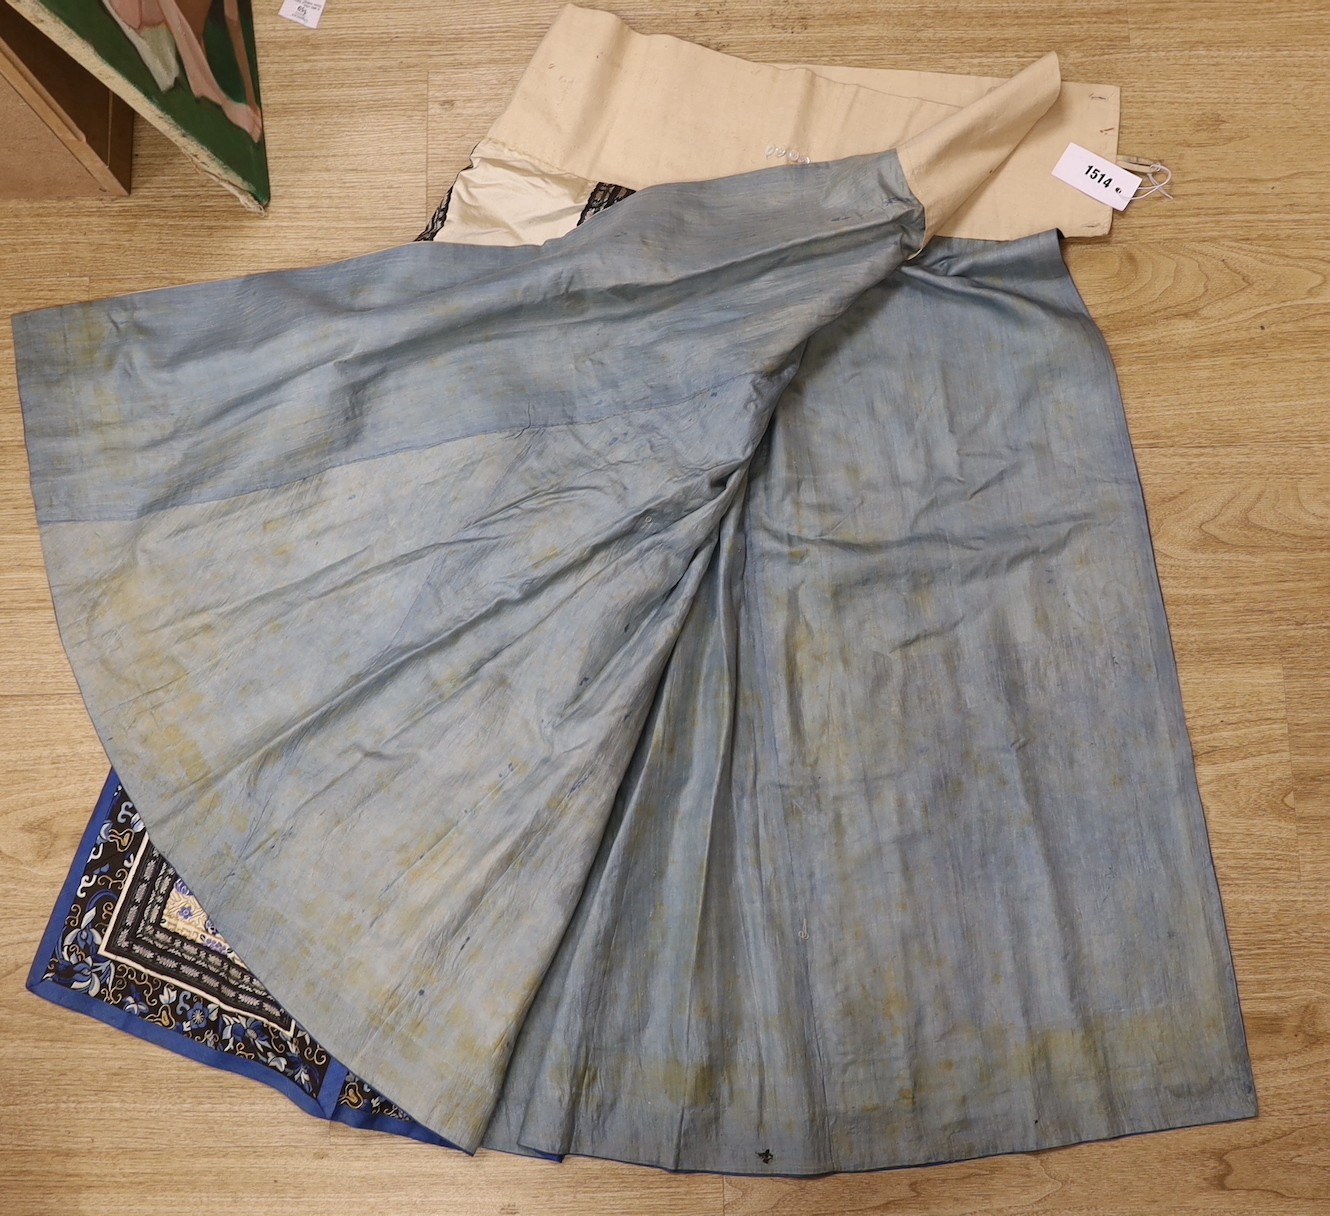 A 19th century multicoloured silk Chinese wedding skirt